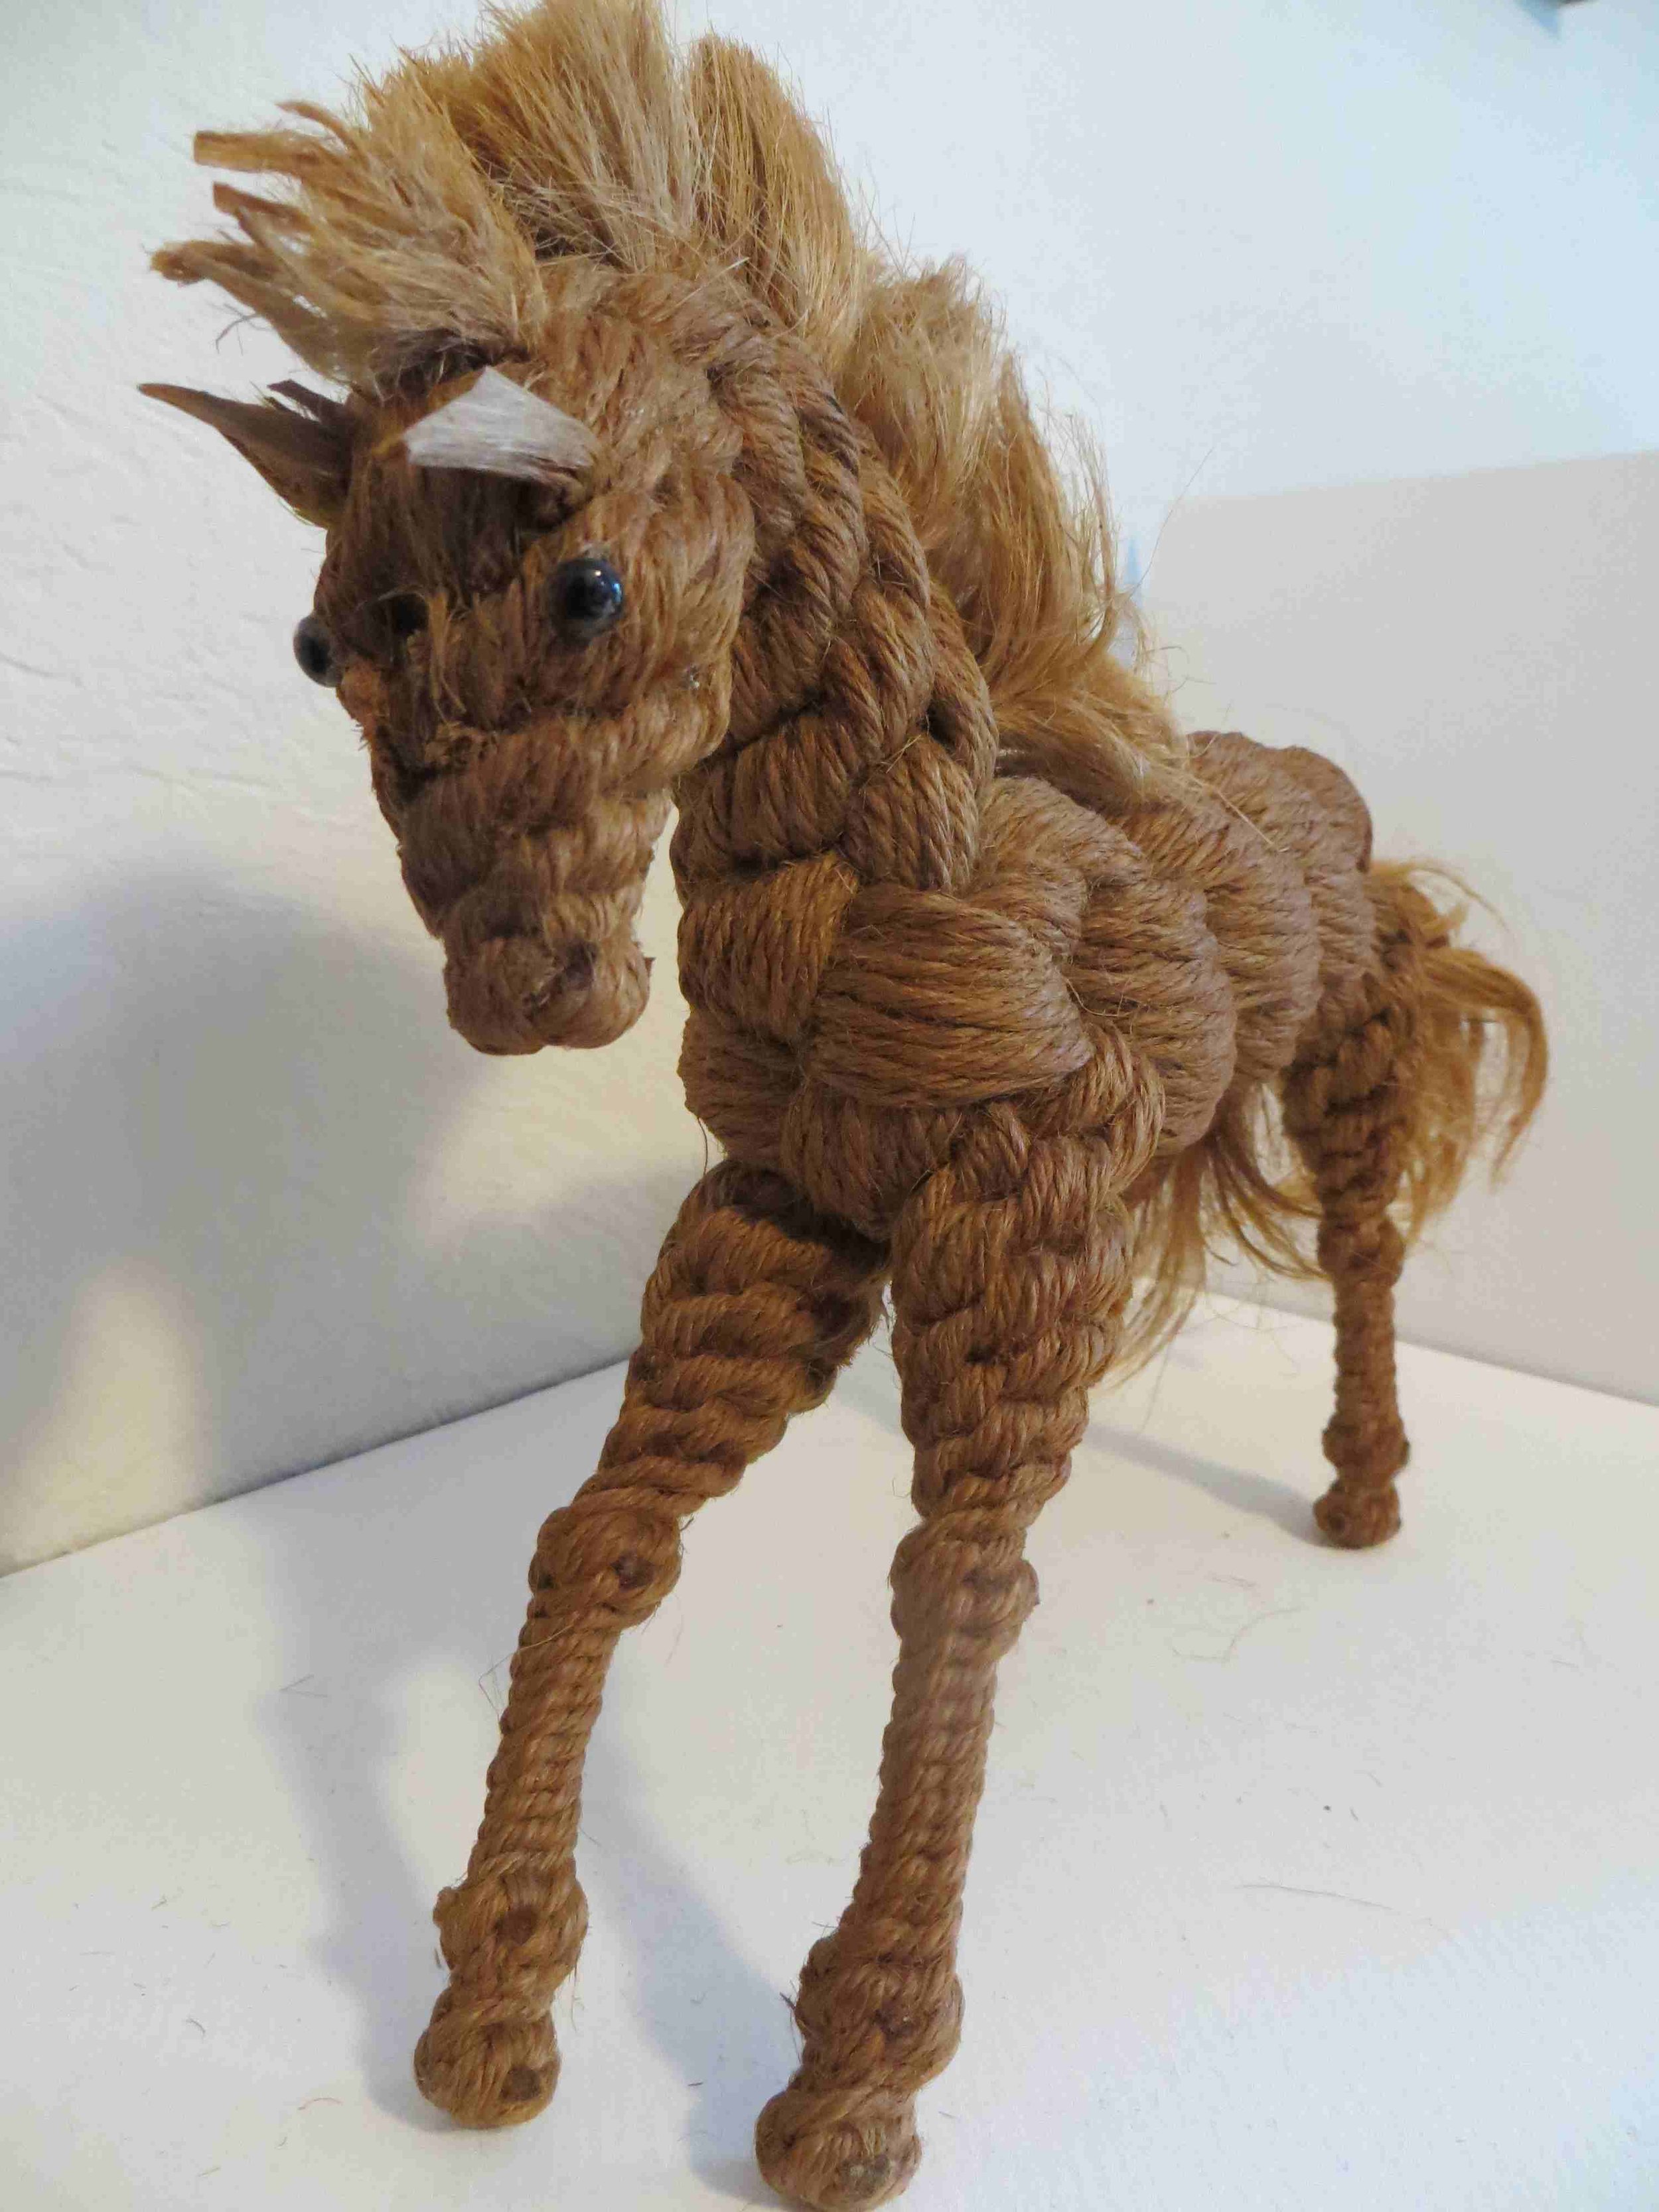 Twine Horse sculpture by Raiford FL INmate ARtist-017 - Copy.jpg